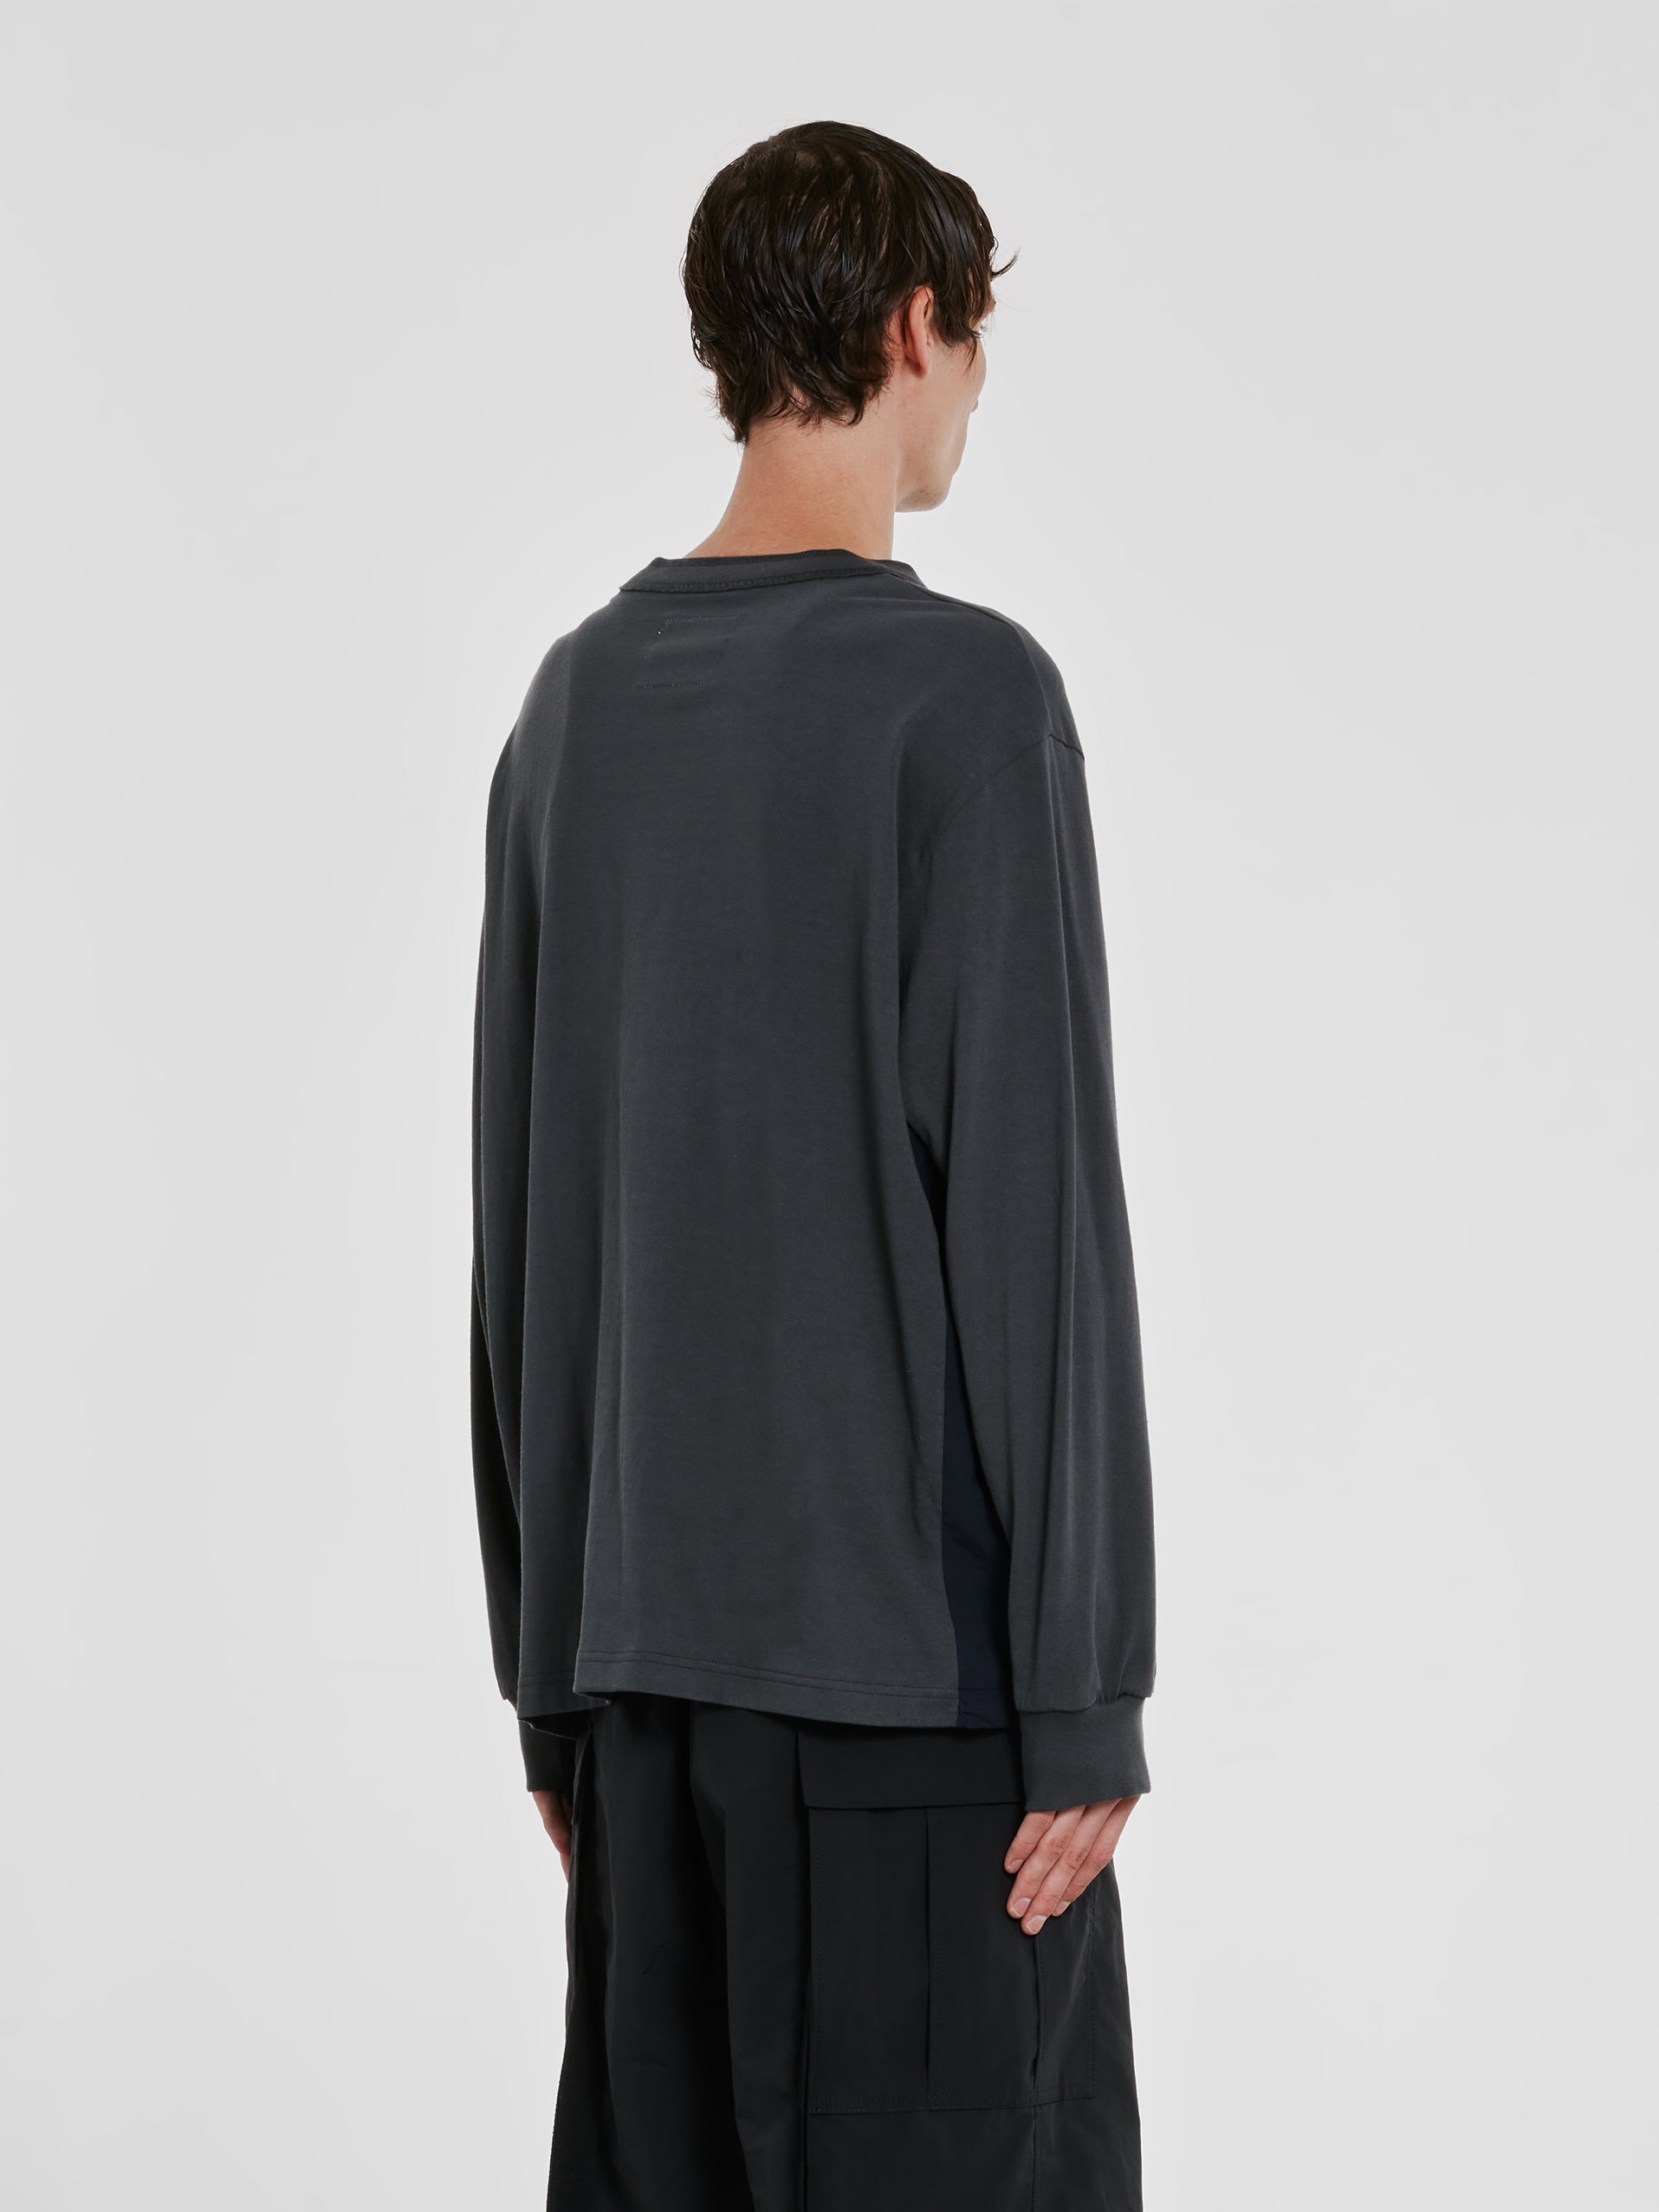 Sacai - Men’s Cotton Jersey L/S T-Shirt - (Charcoal) view 3